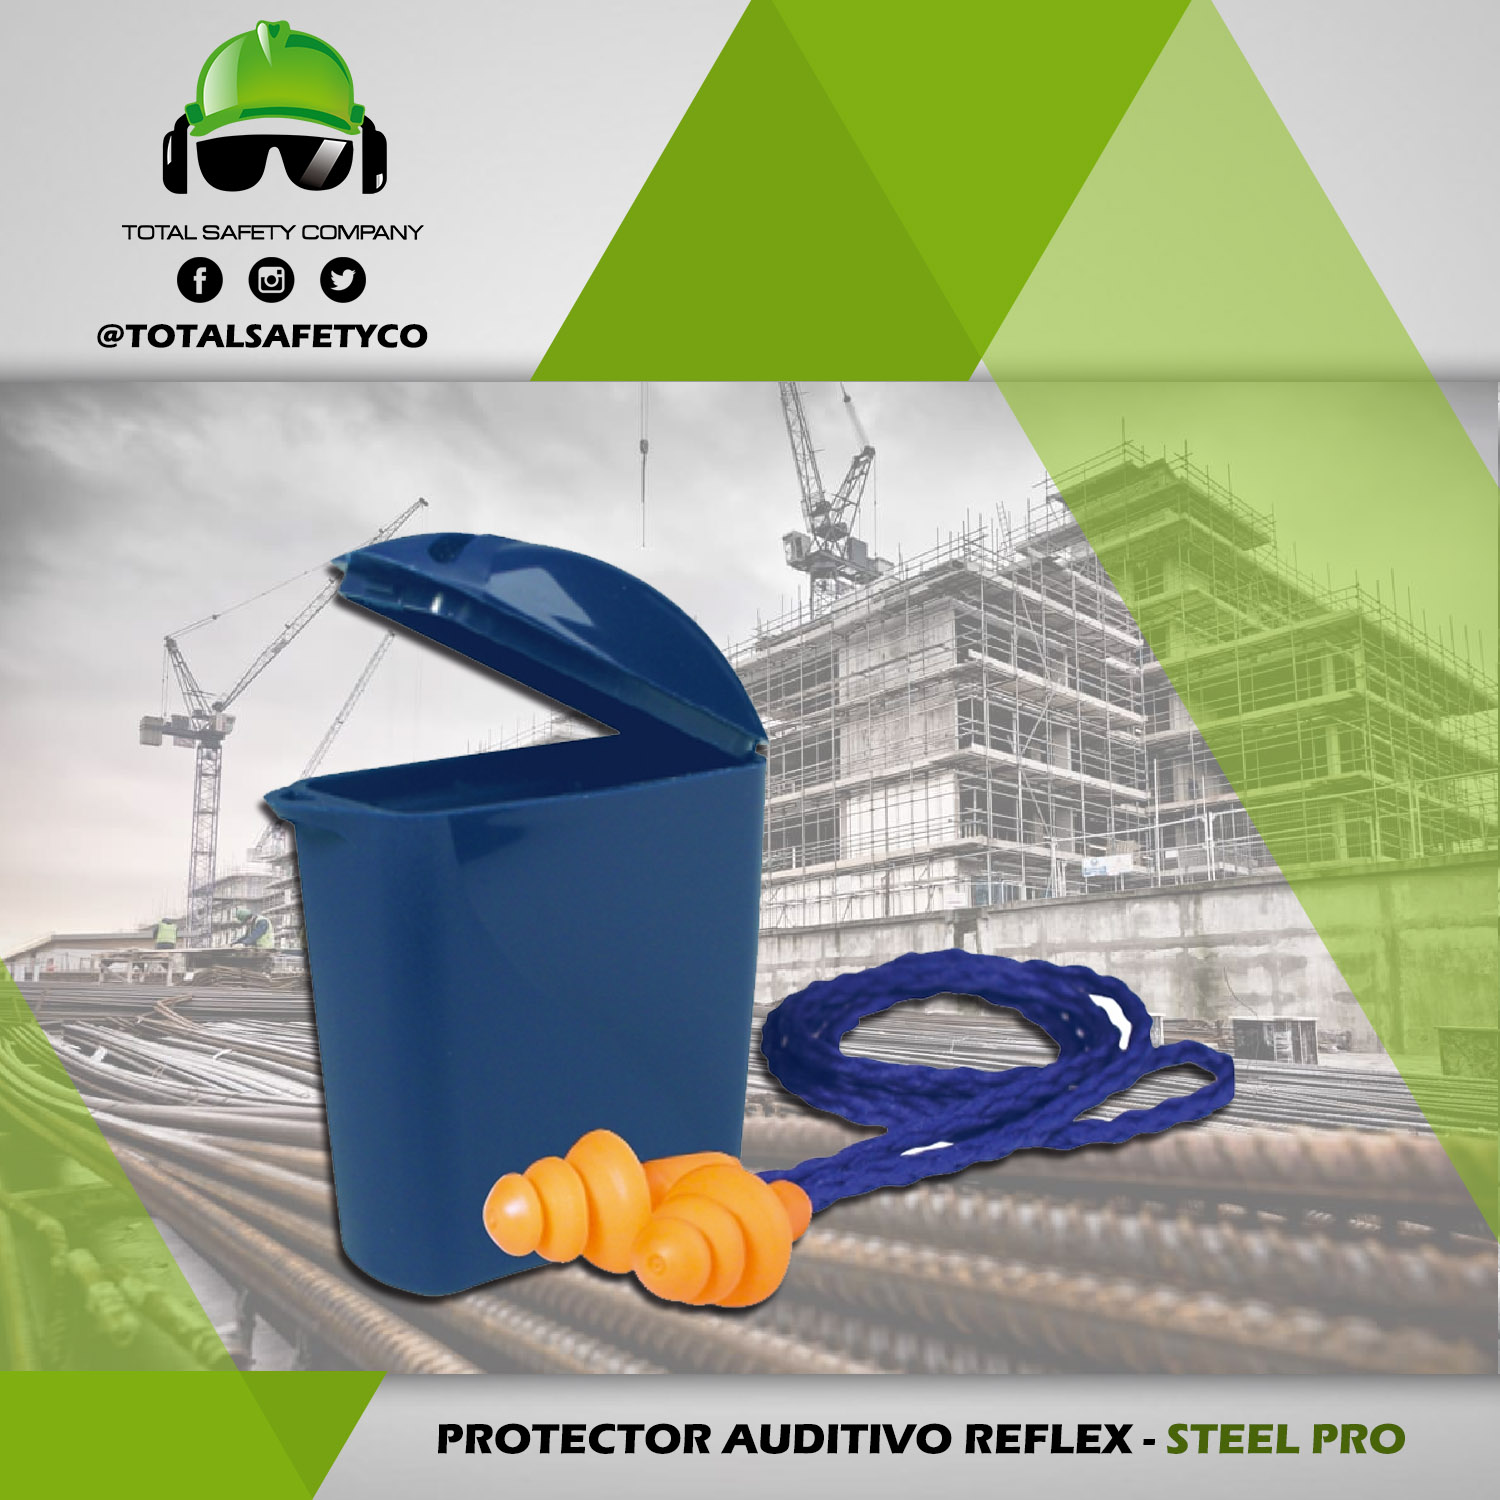 Protector auditivo reflex - STEEL PRO 